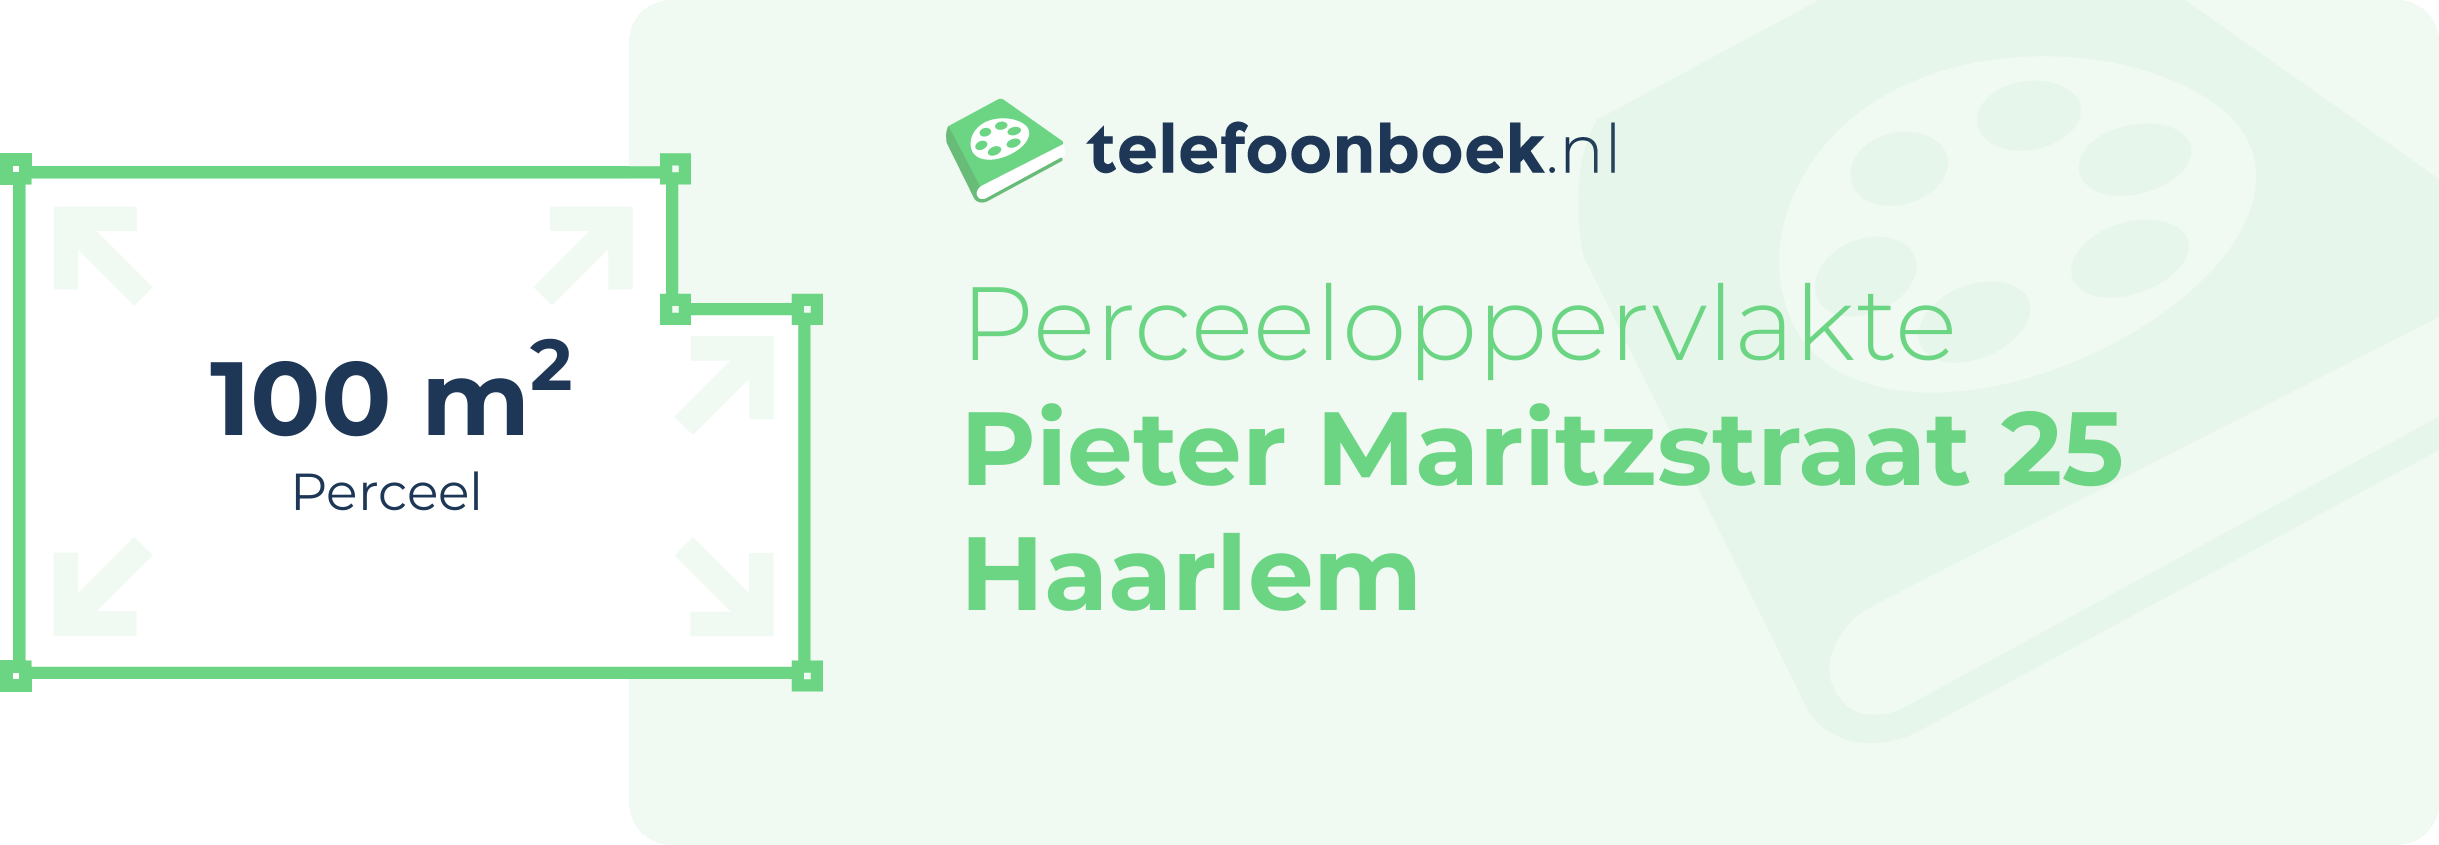 Perceeloppervlakte Pieter Maritzstraat 25 Haarlem